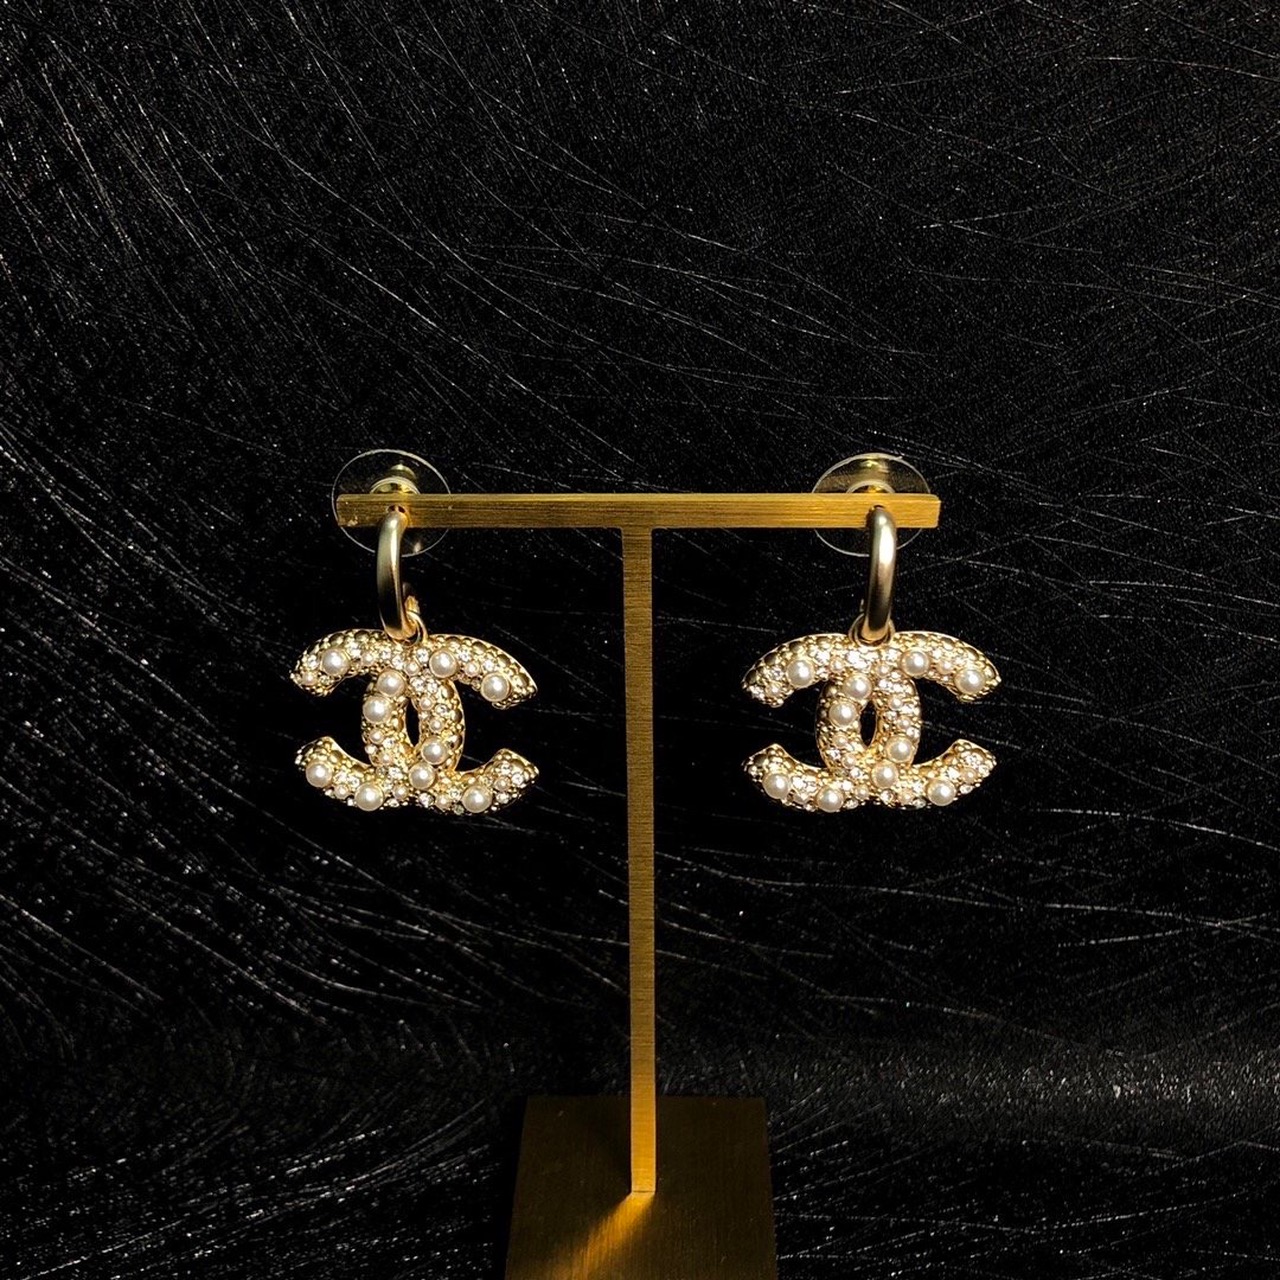 Chanel Gold & Faux Pearl 3 'CC' Earrings Q6JDZA28DB005